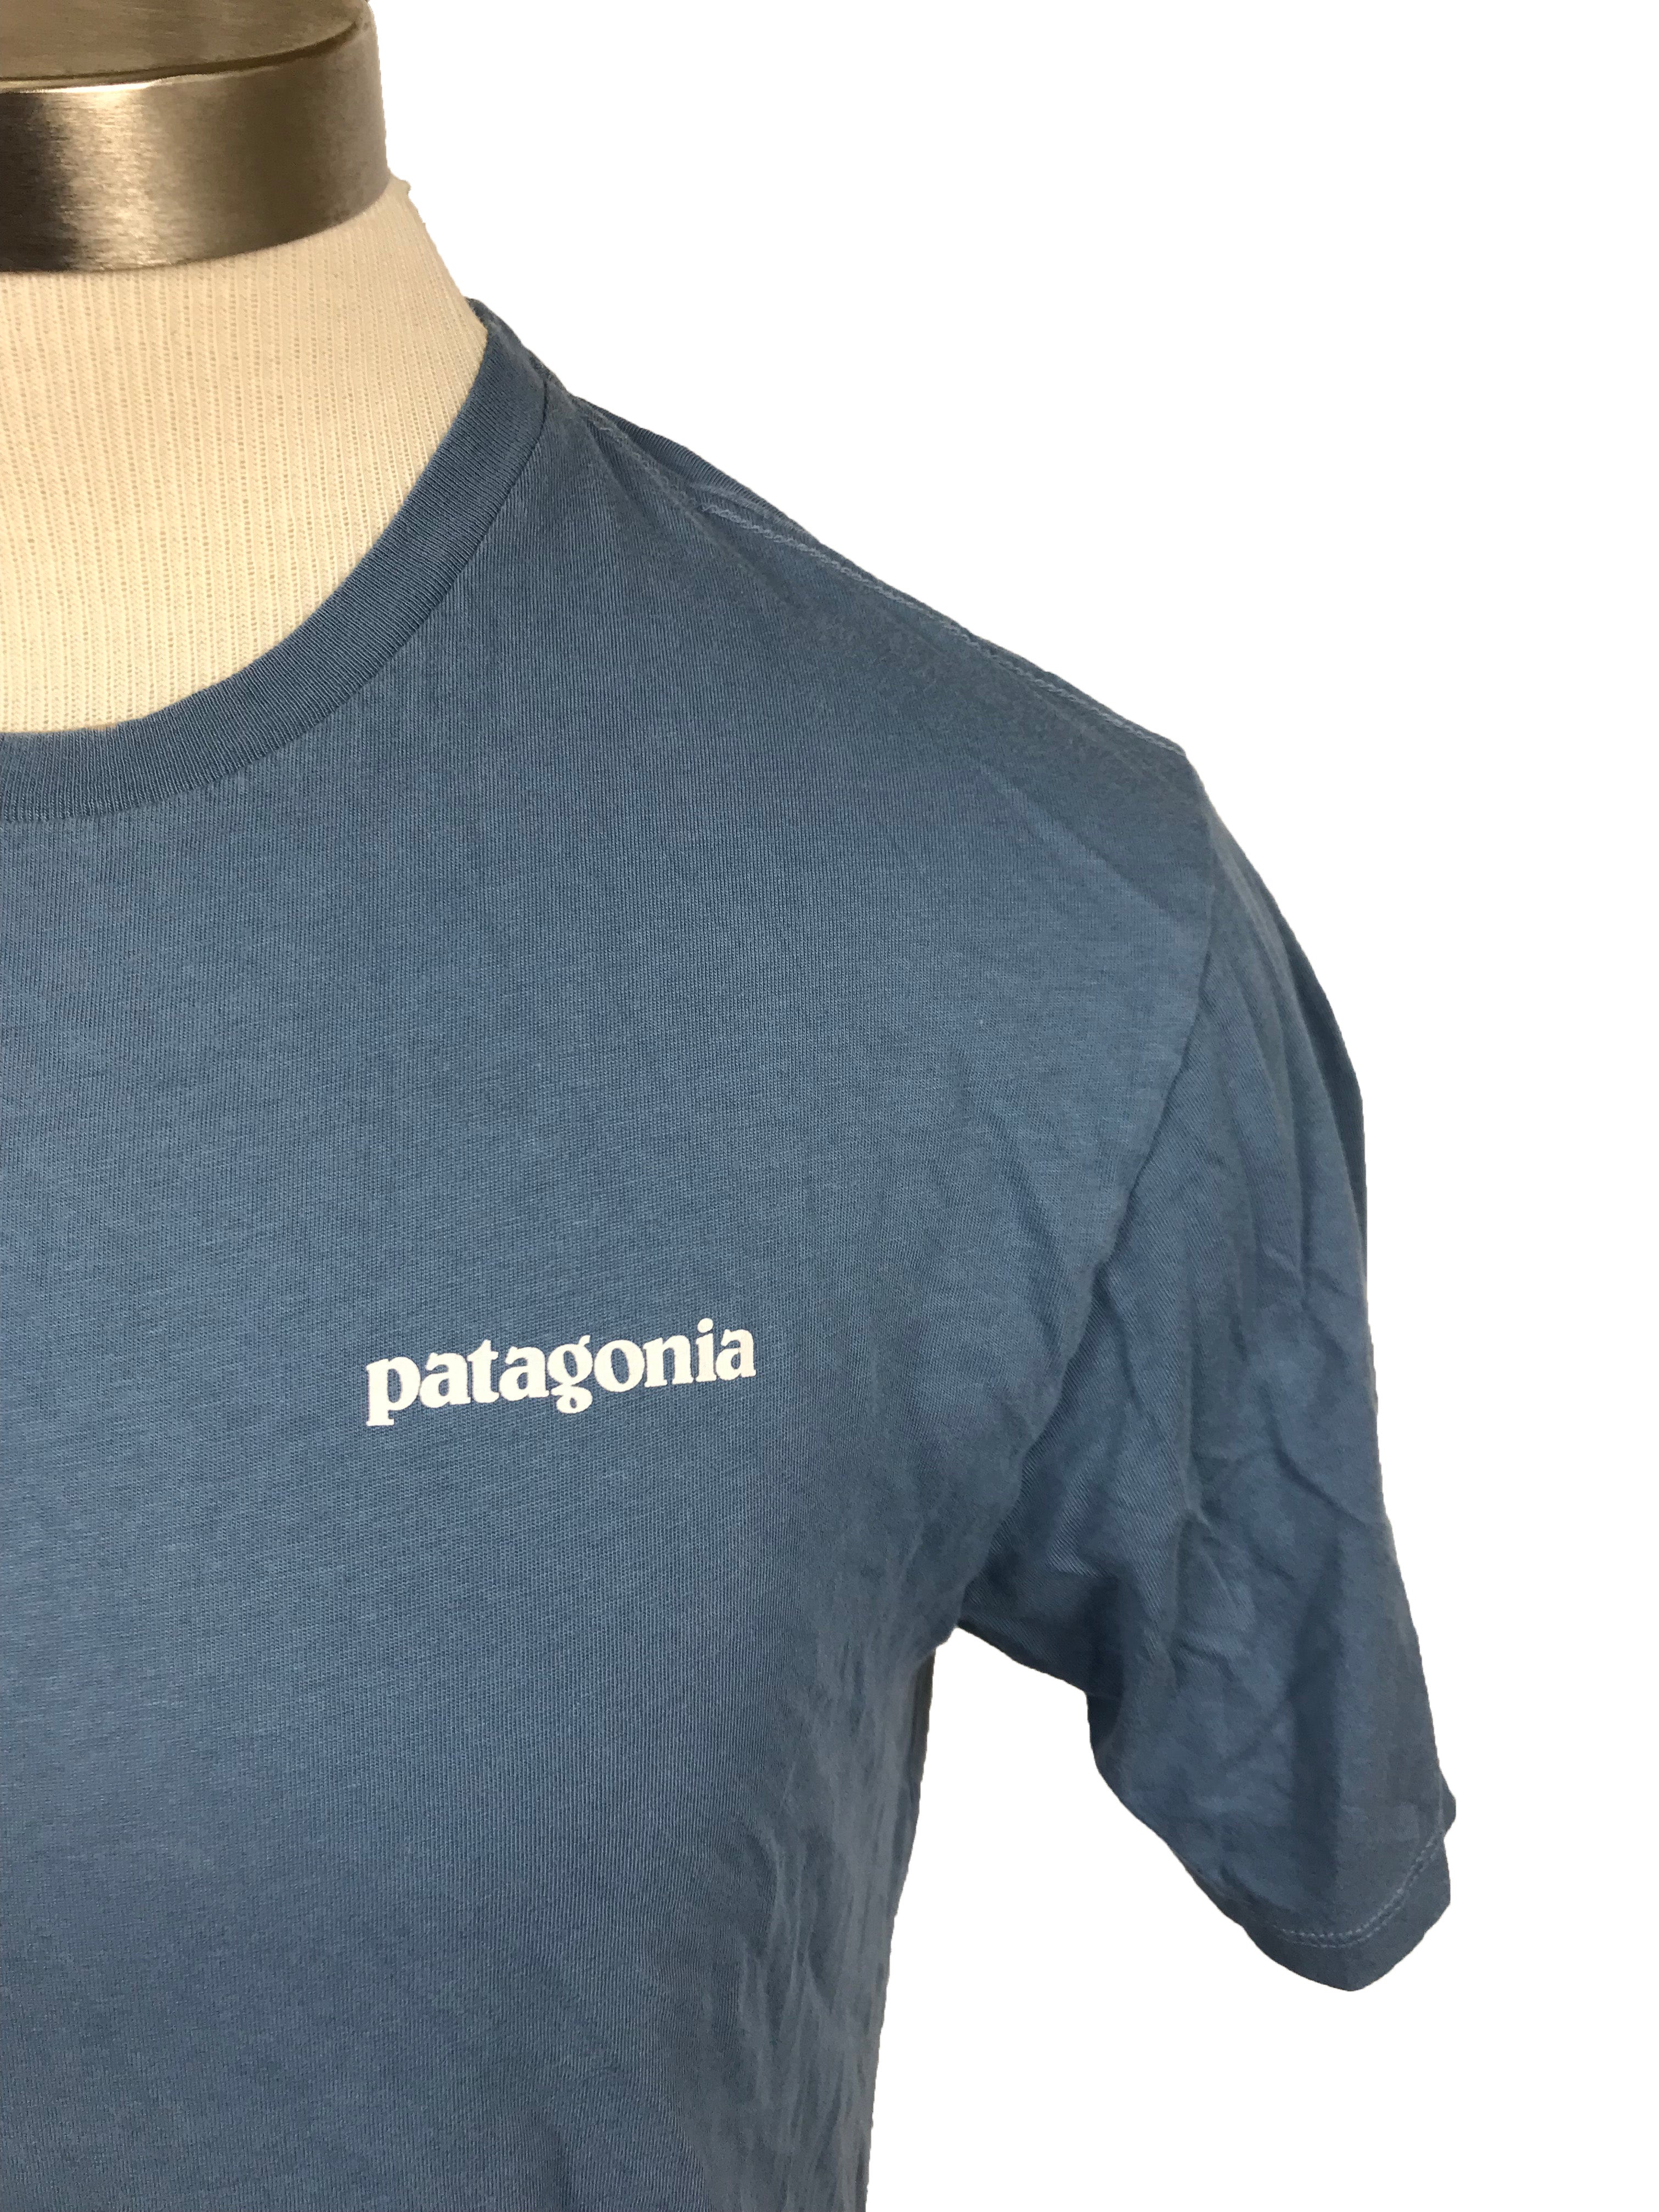 Patagonia Blue Logo T-Shirt Men's Size Small